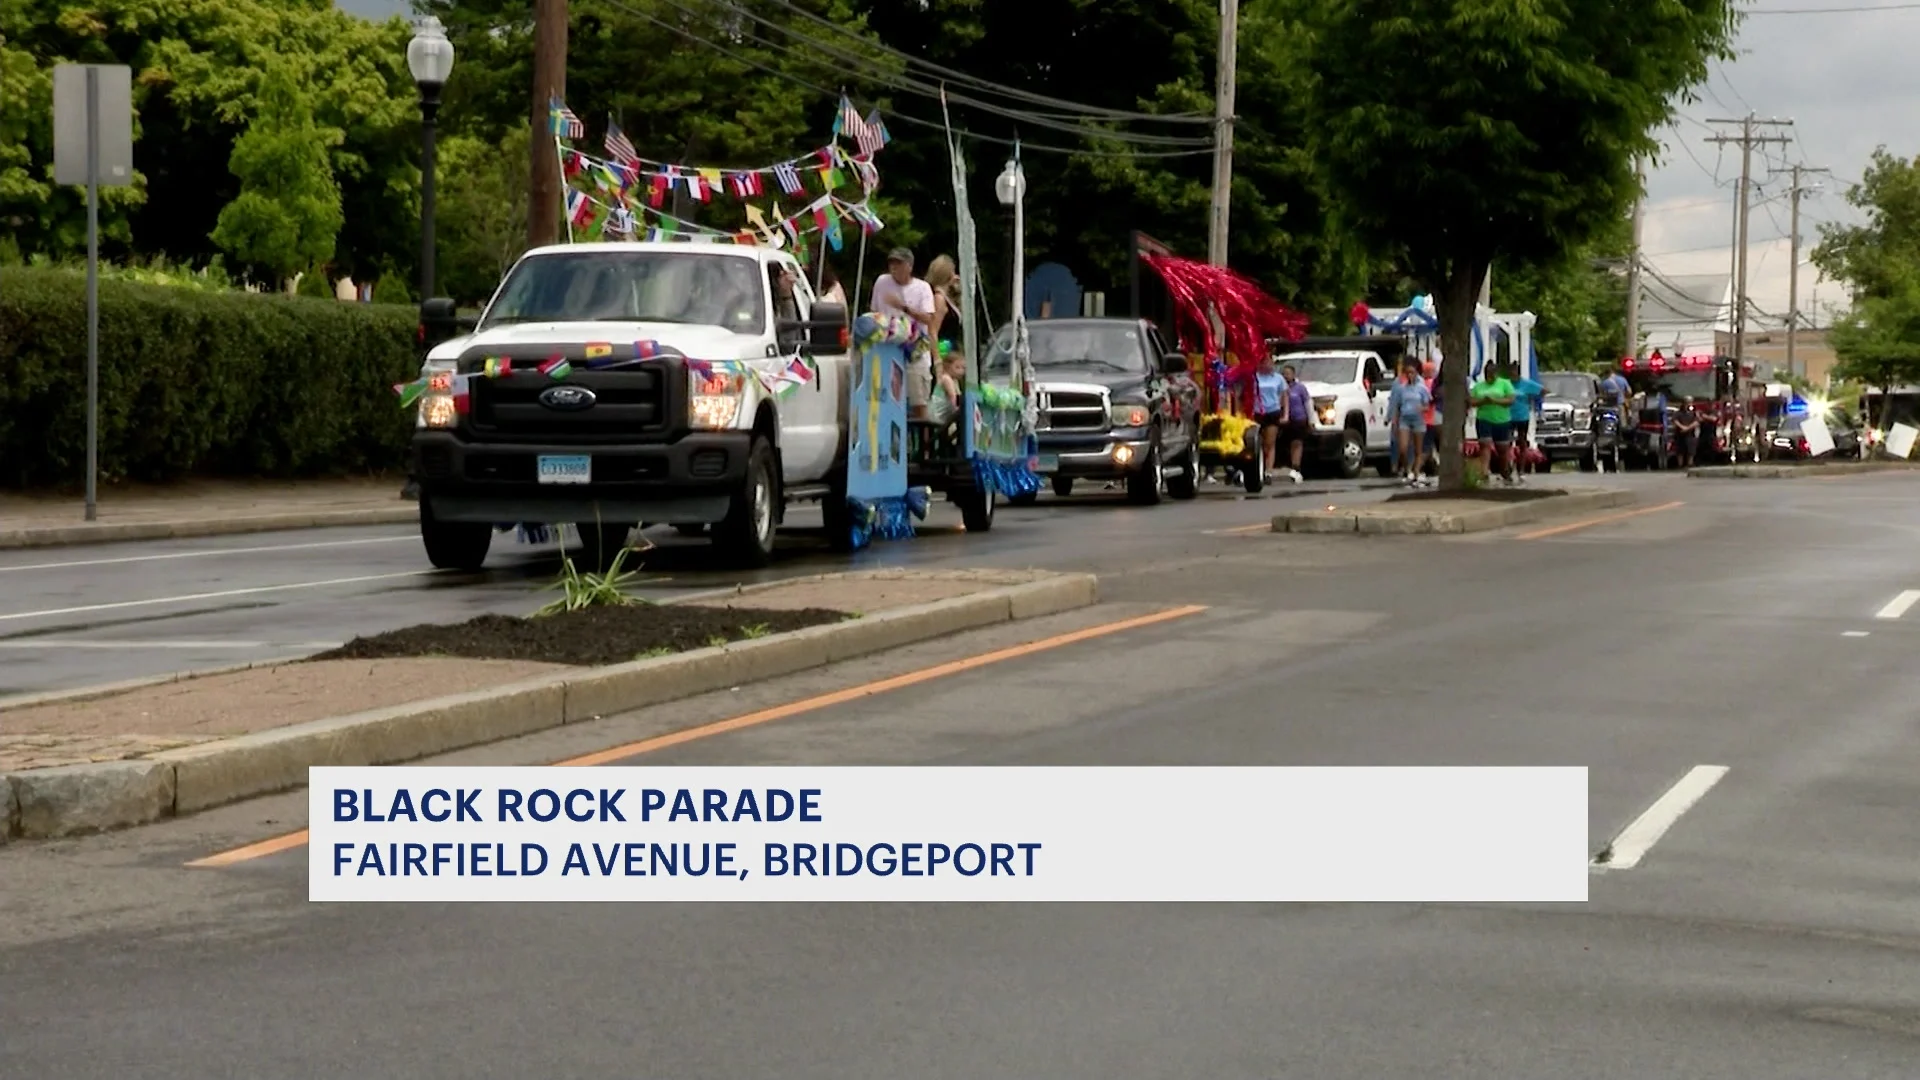 Wet weather doesn't damper Black Rock Parade celebrations in Bridgeport